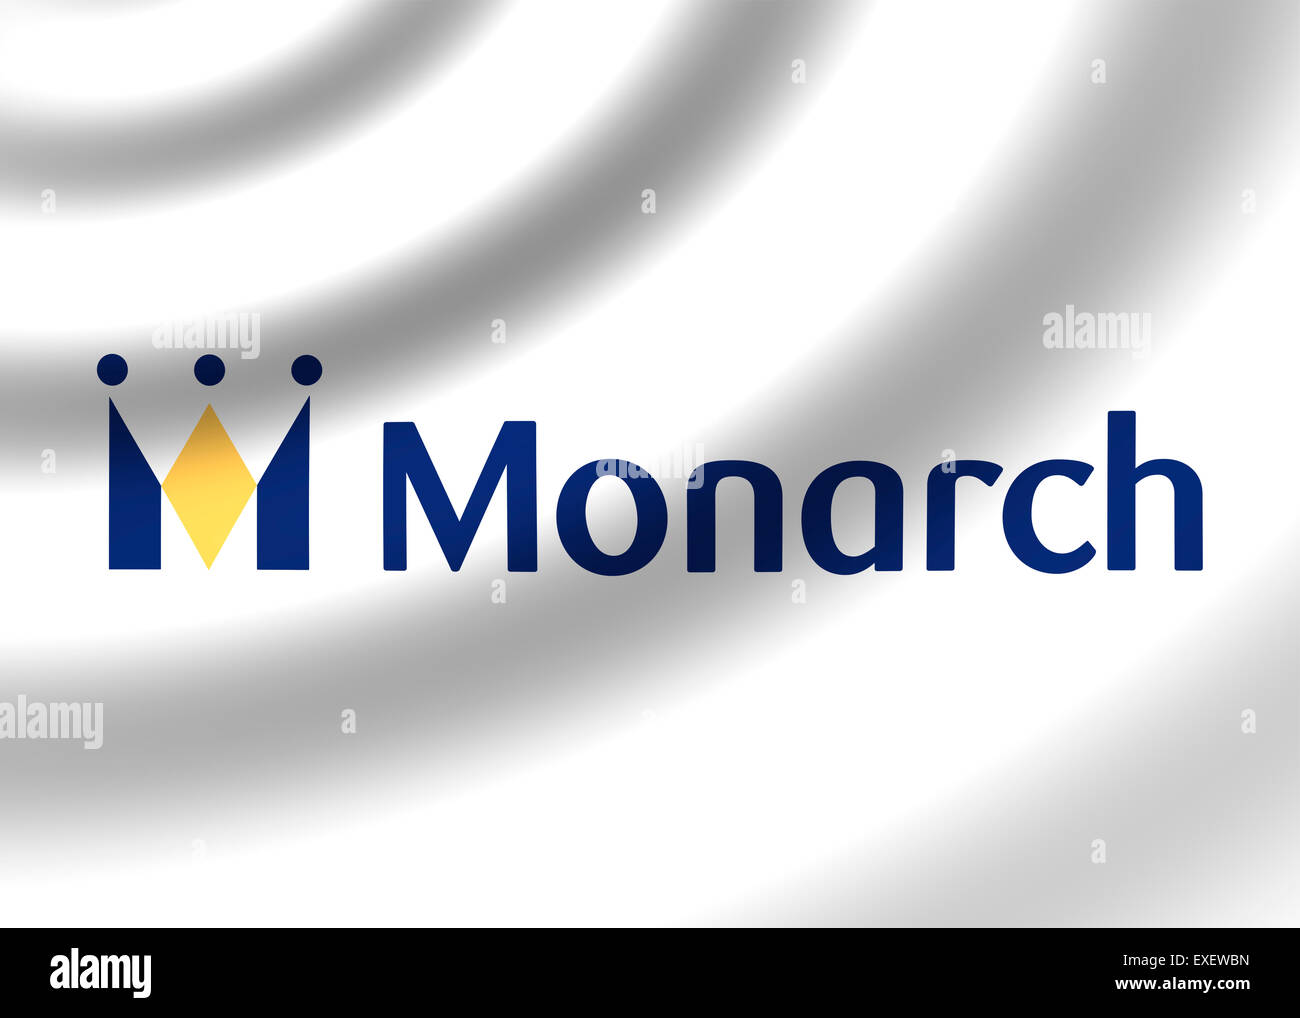 Monarch Airlines logo icon flag symbol emblem sign Stock Photo